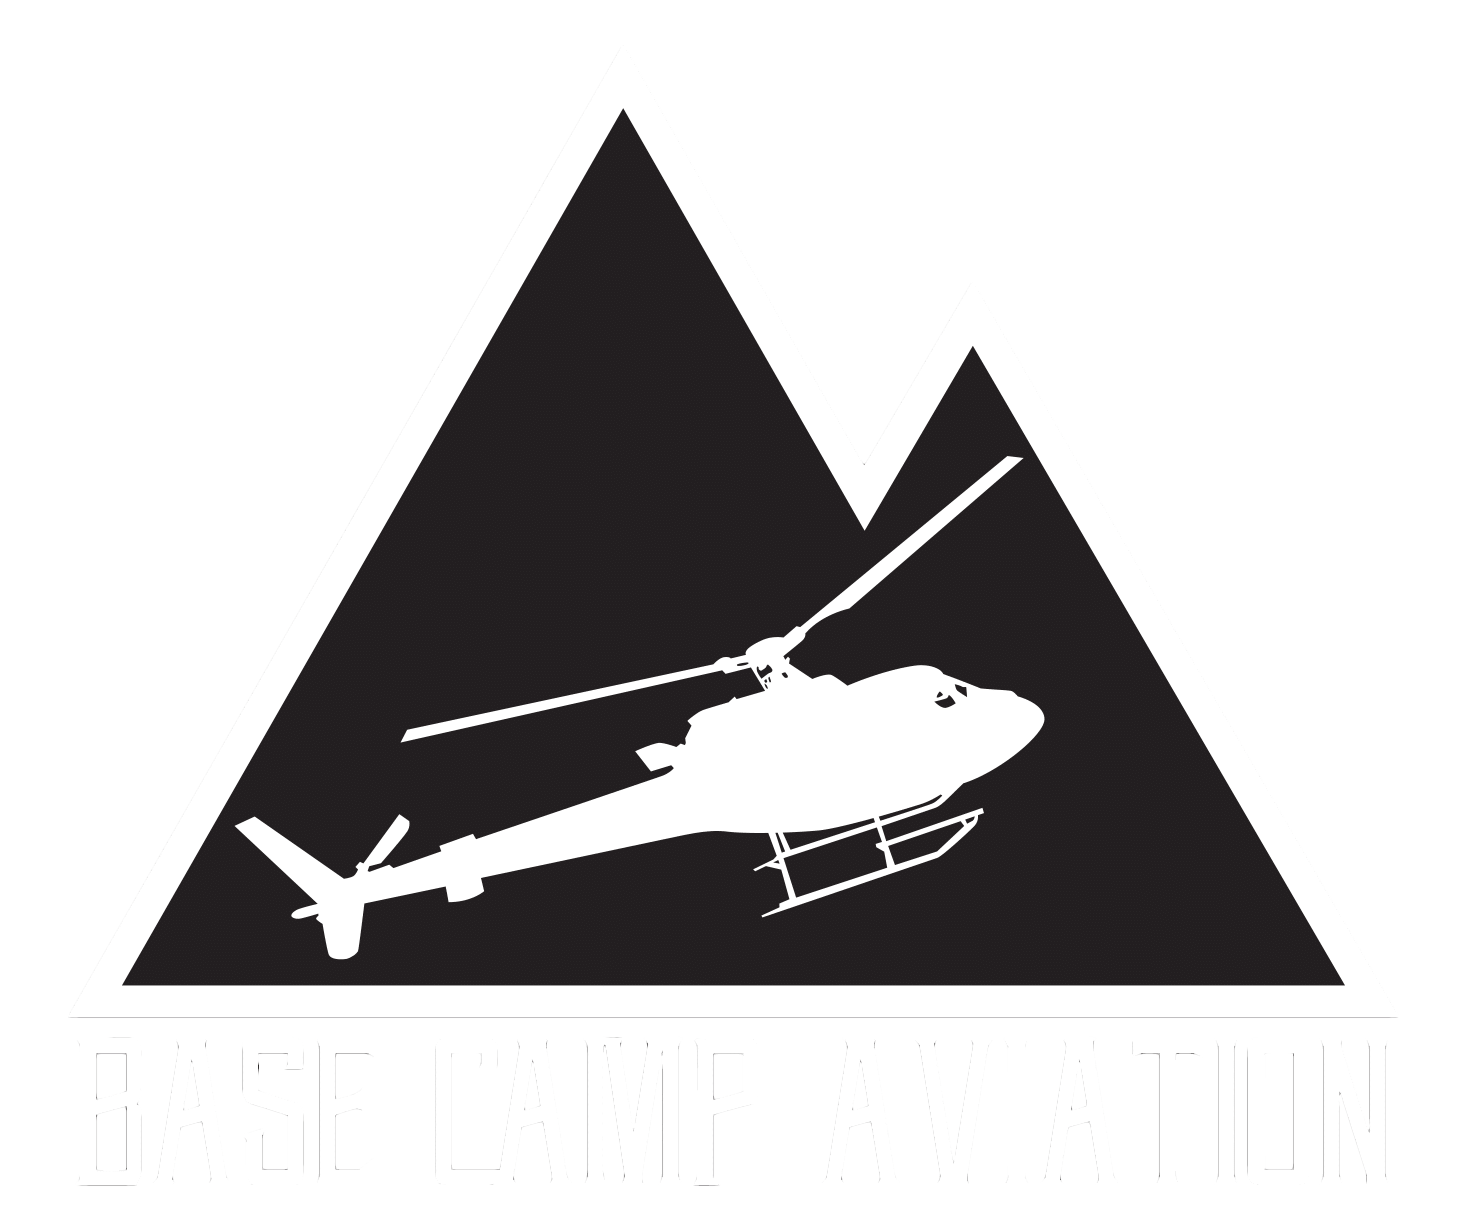 BASE CAMP AVIATION